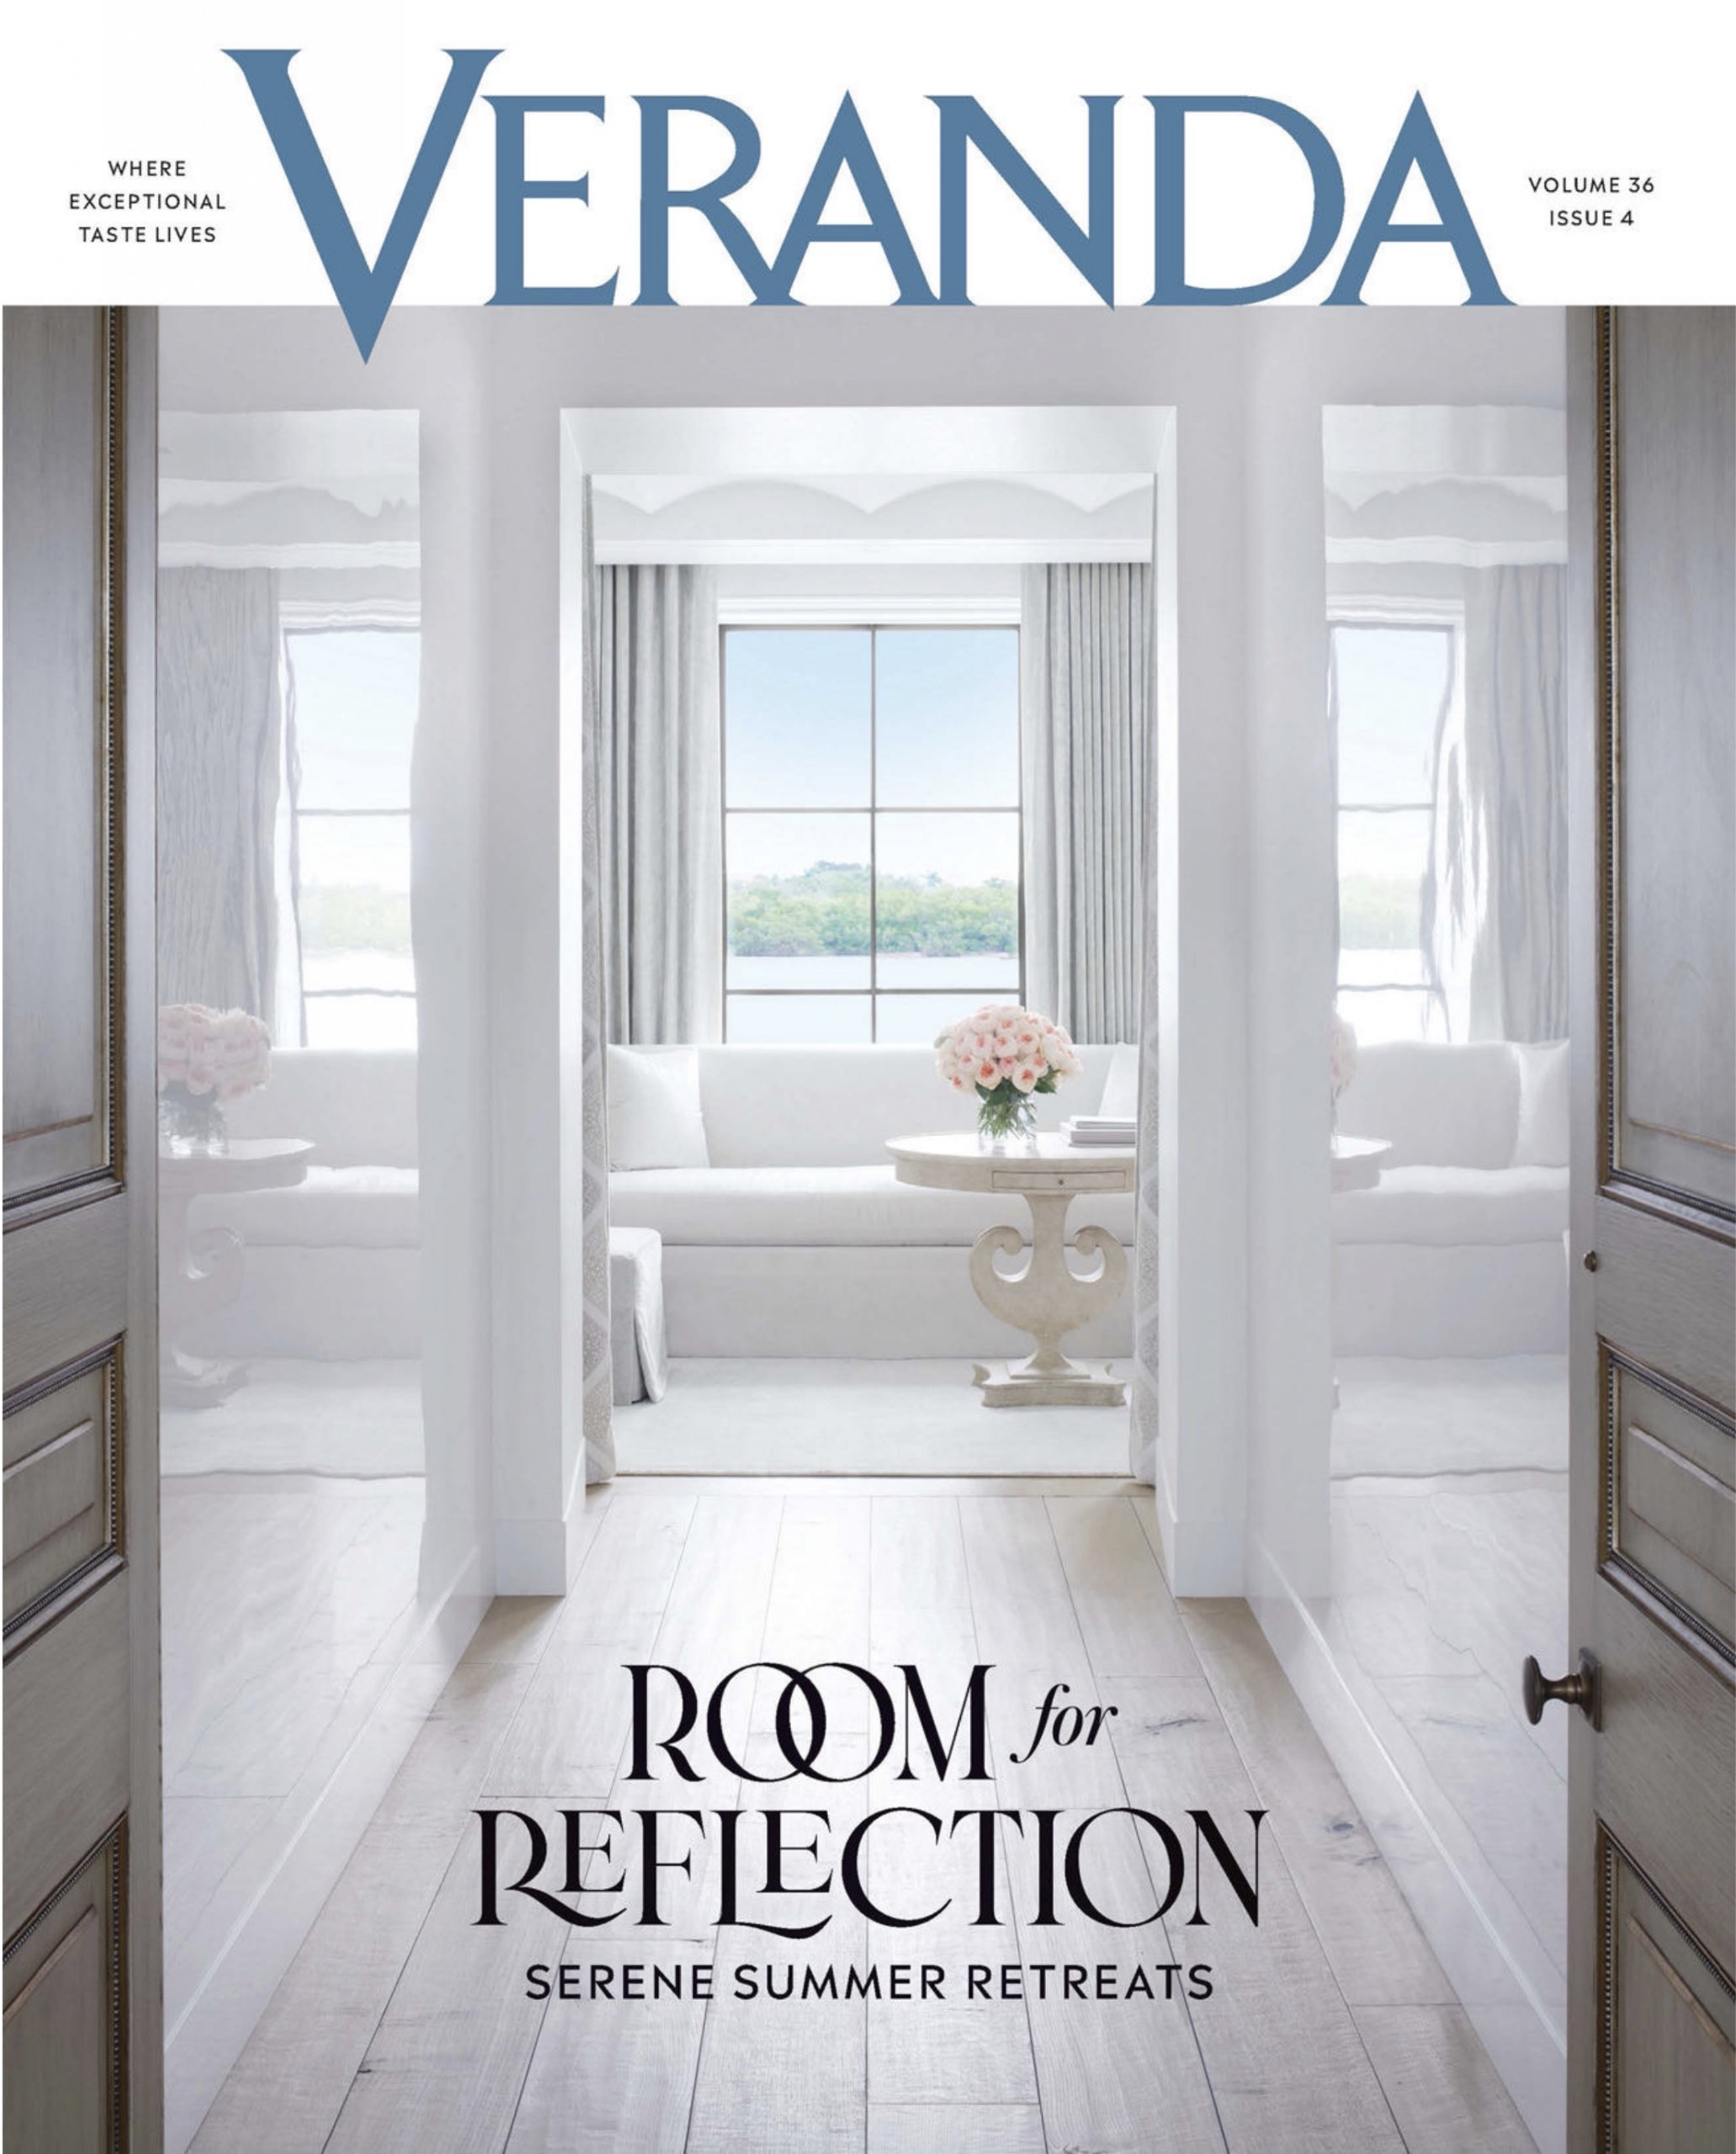 Veranda magazine Image